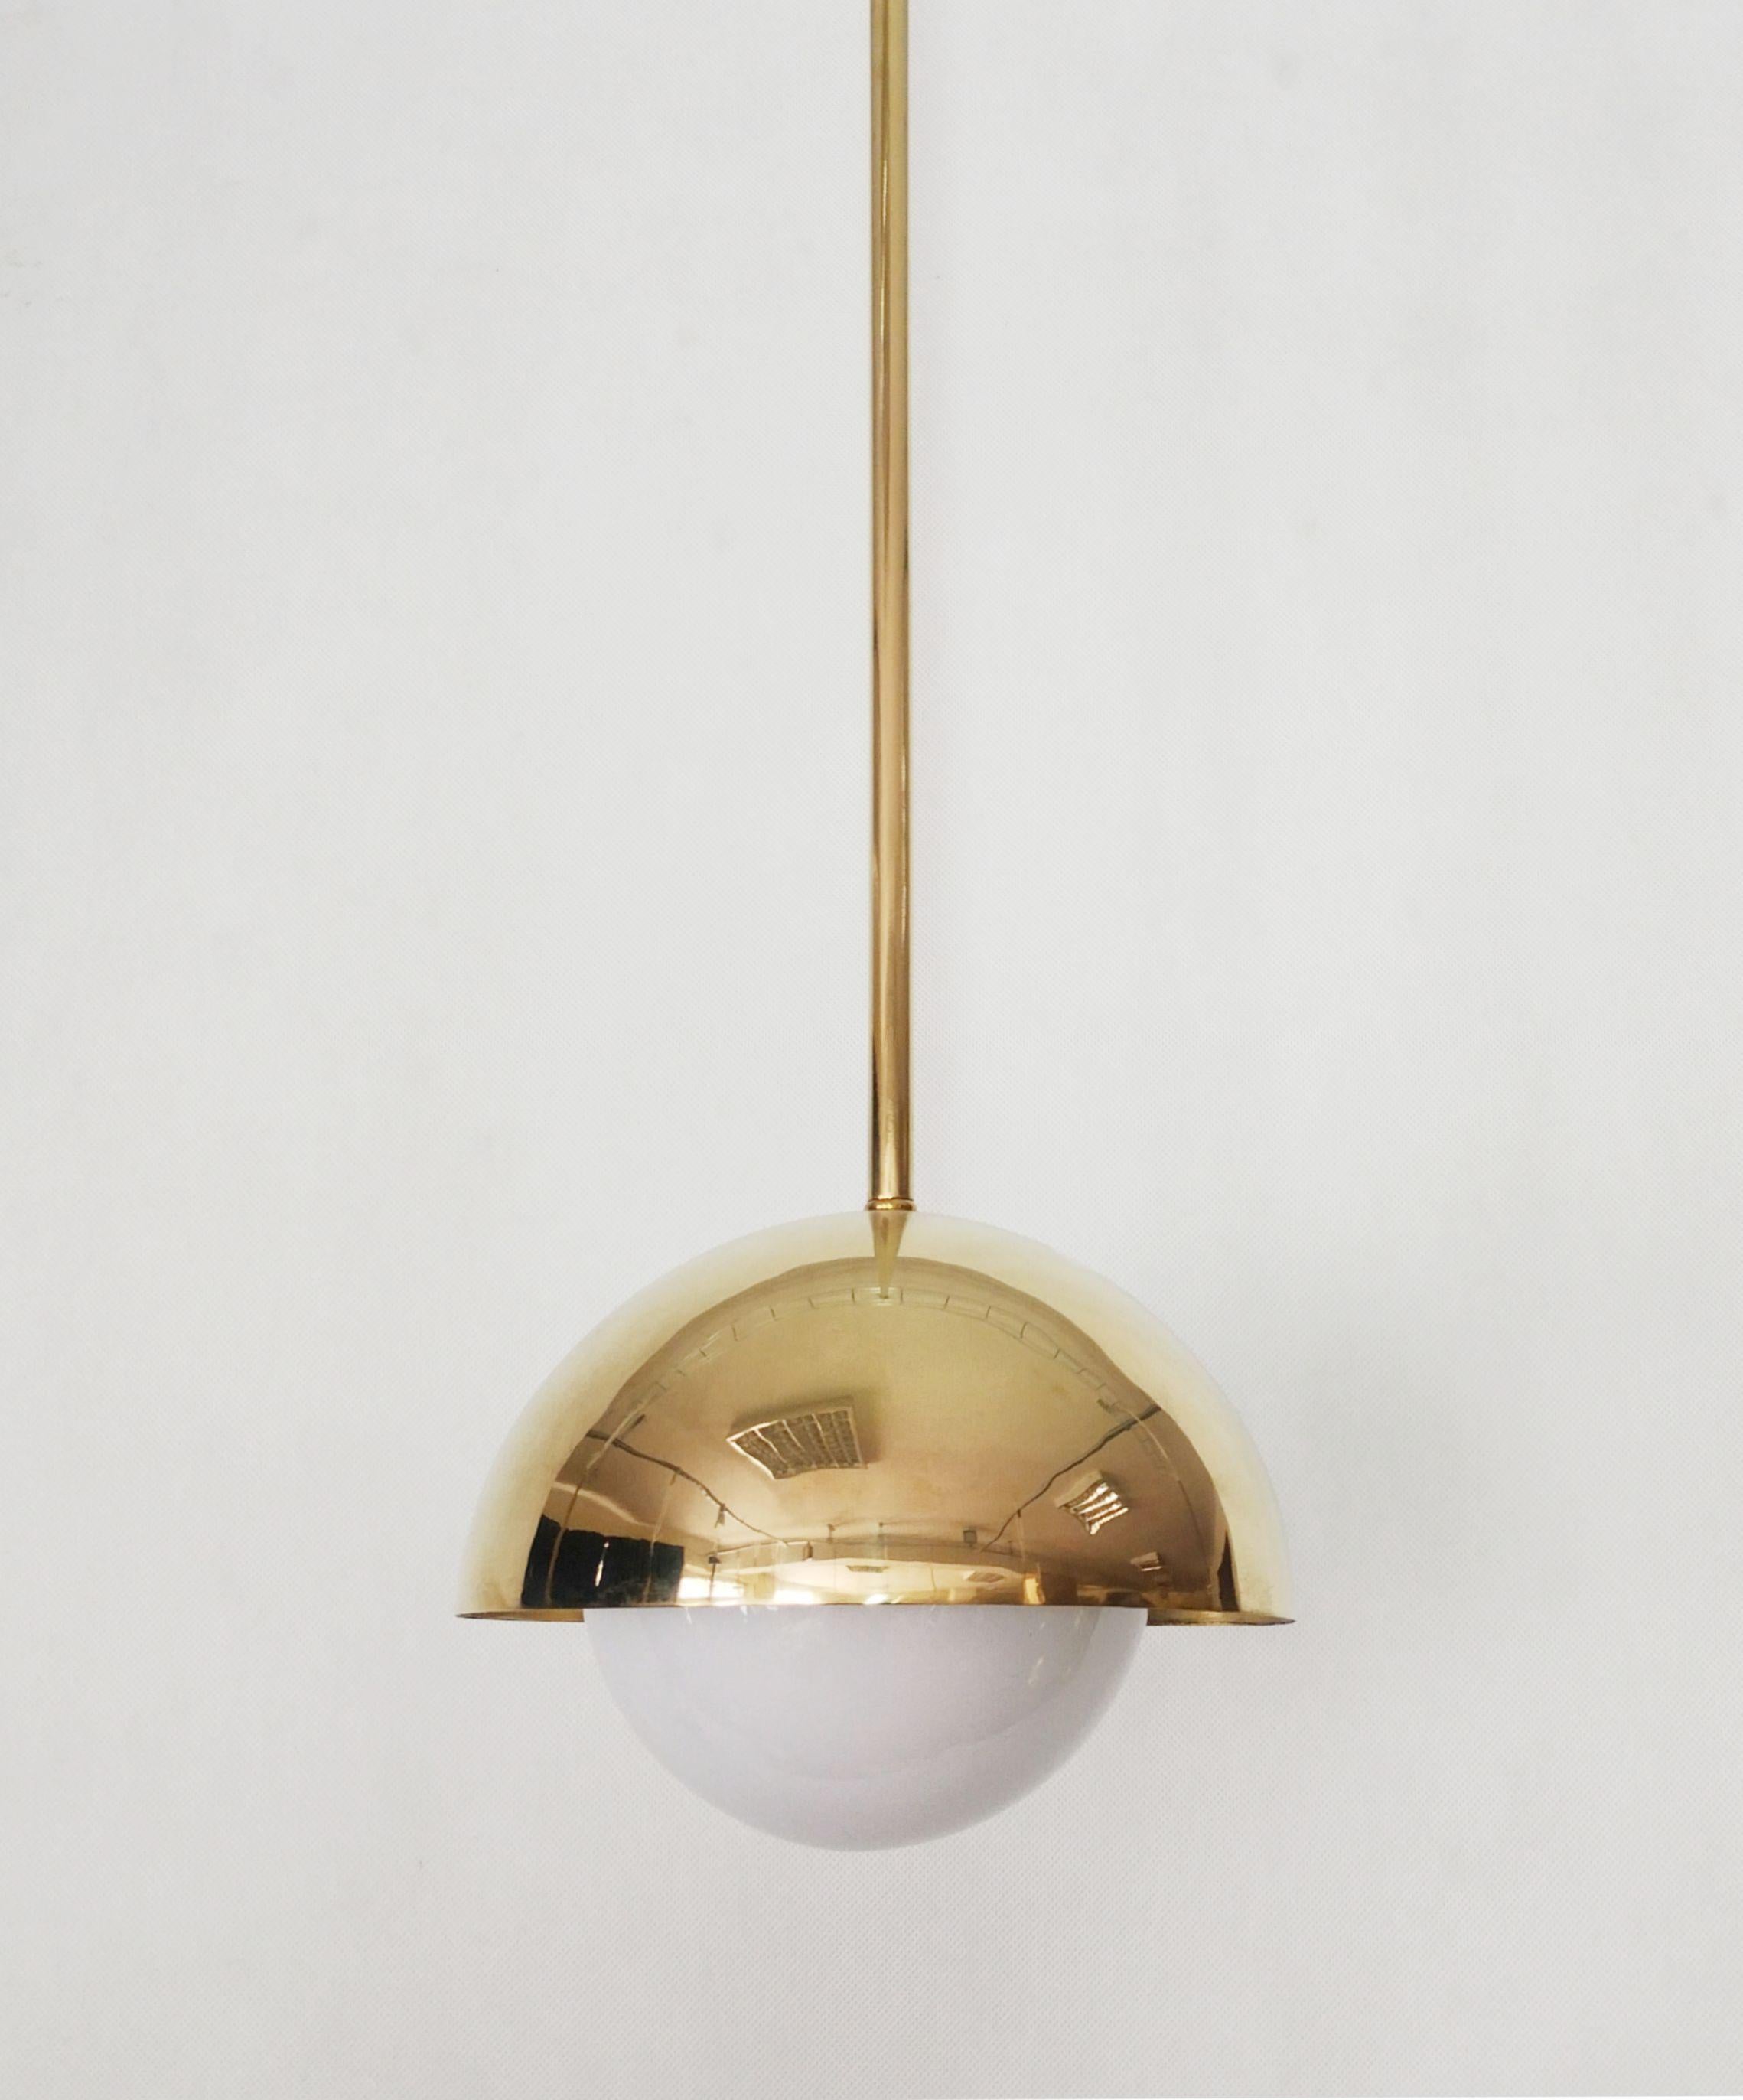 European Qulq30, Solid Brass Pendant Light by Candas Design, 30cm diam For Sale